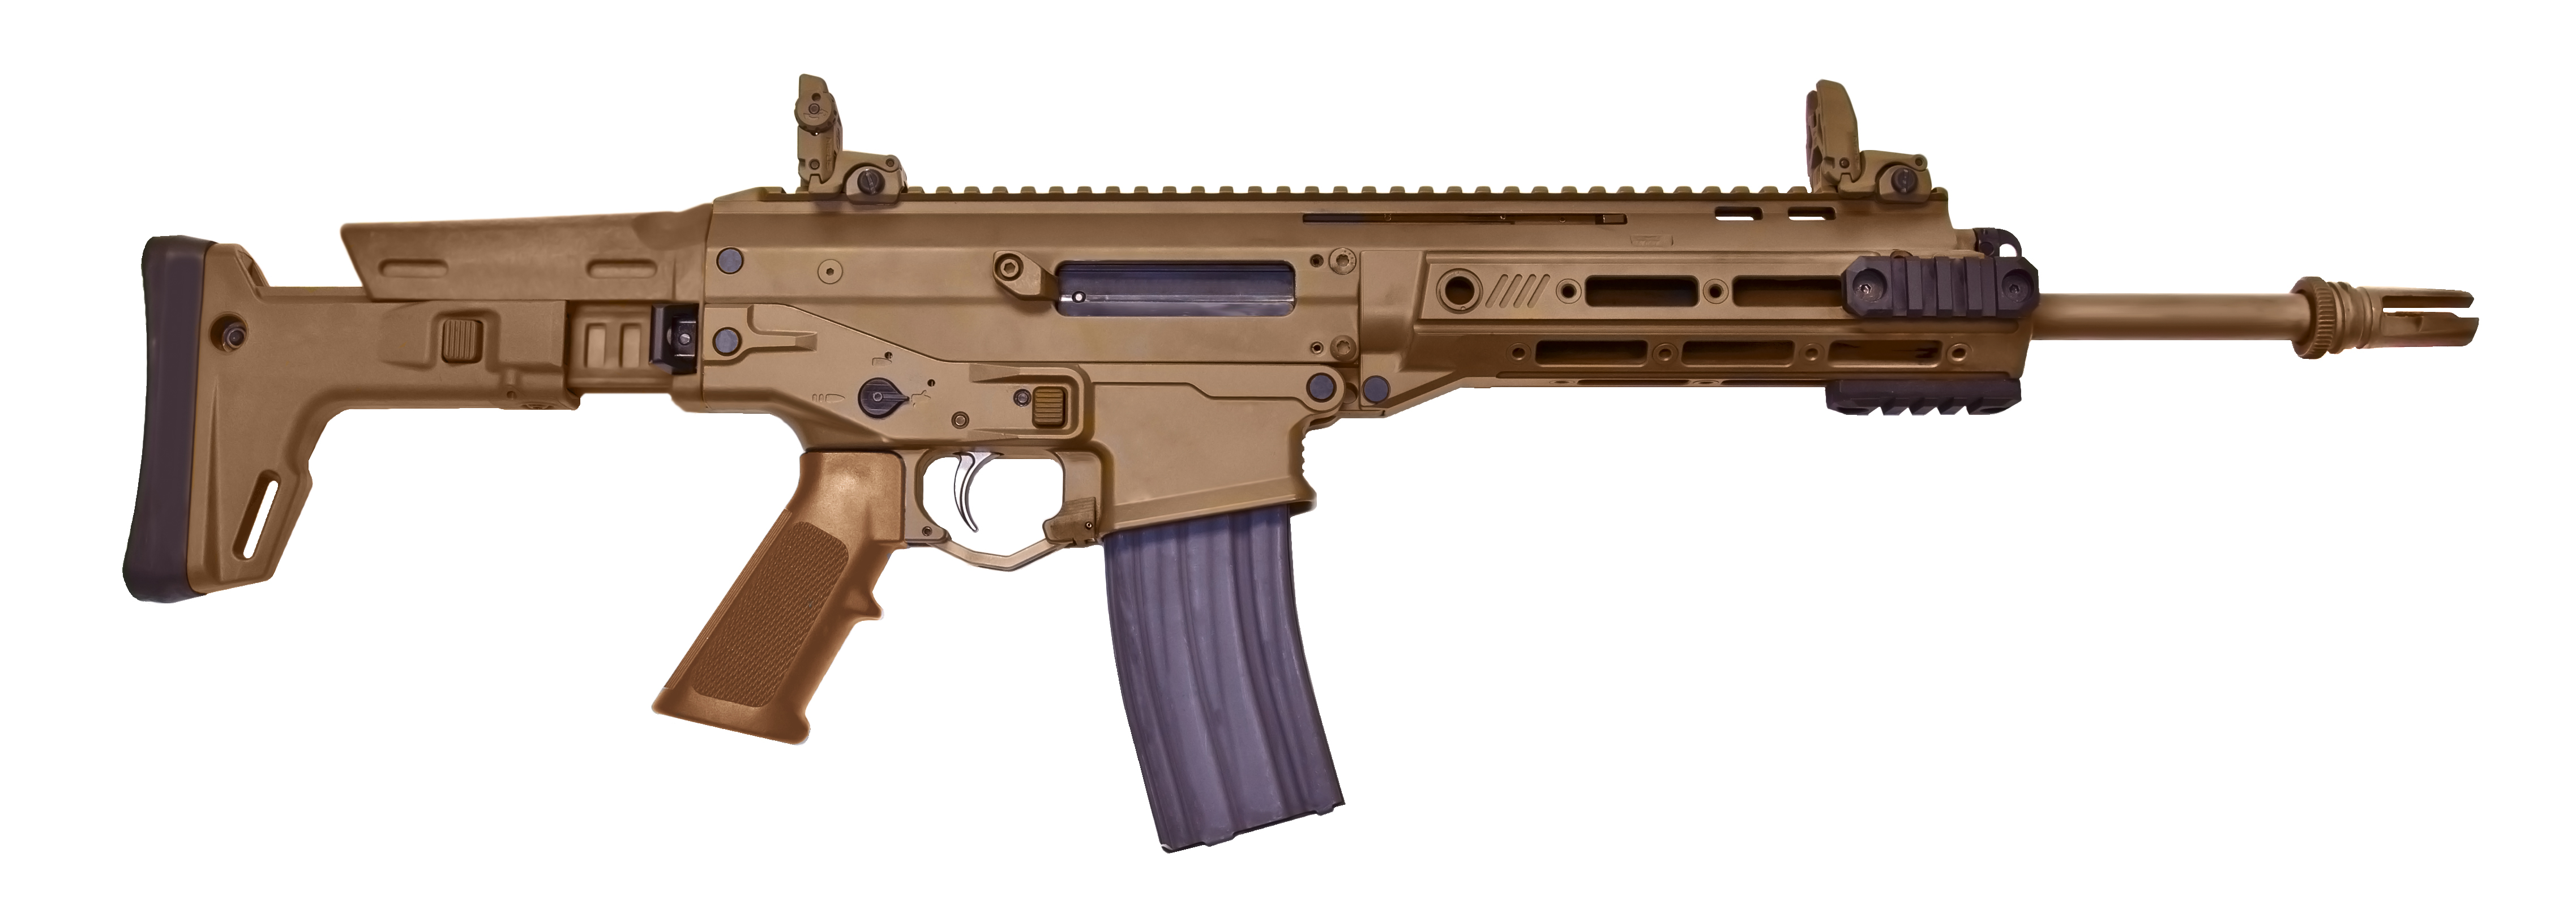 us-remington-advanced-combat-rifle.jpg